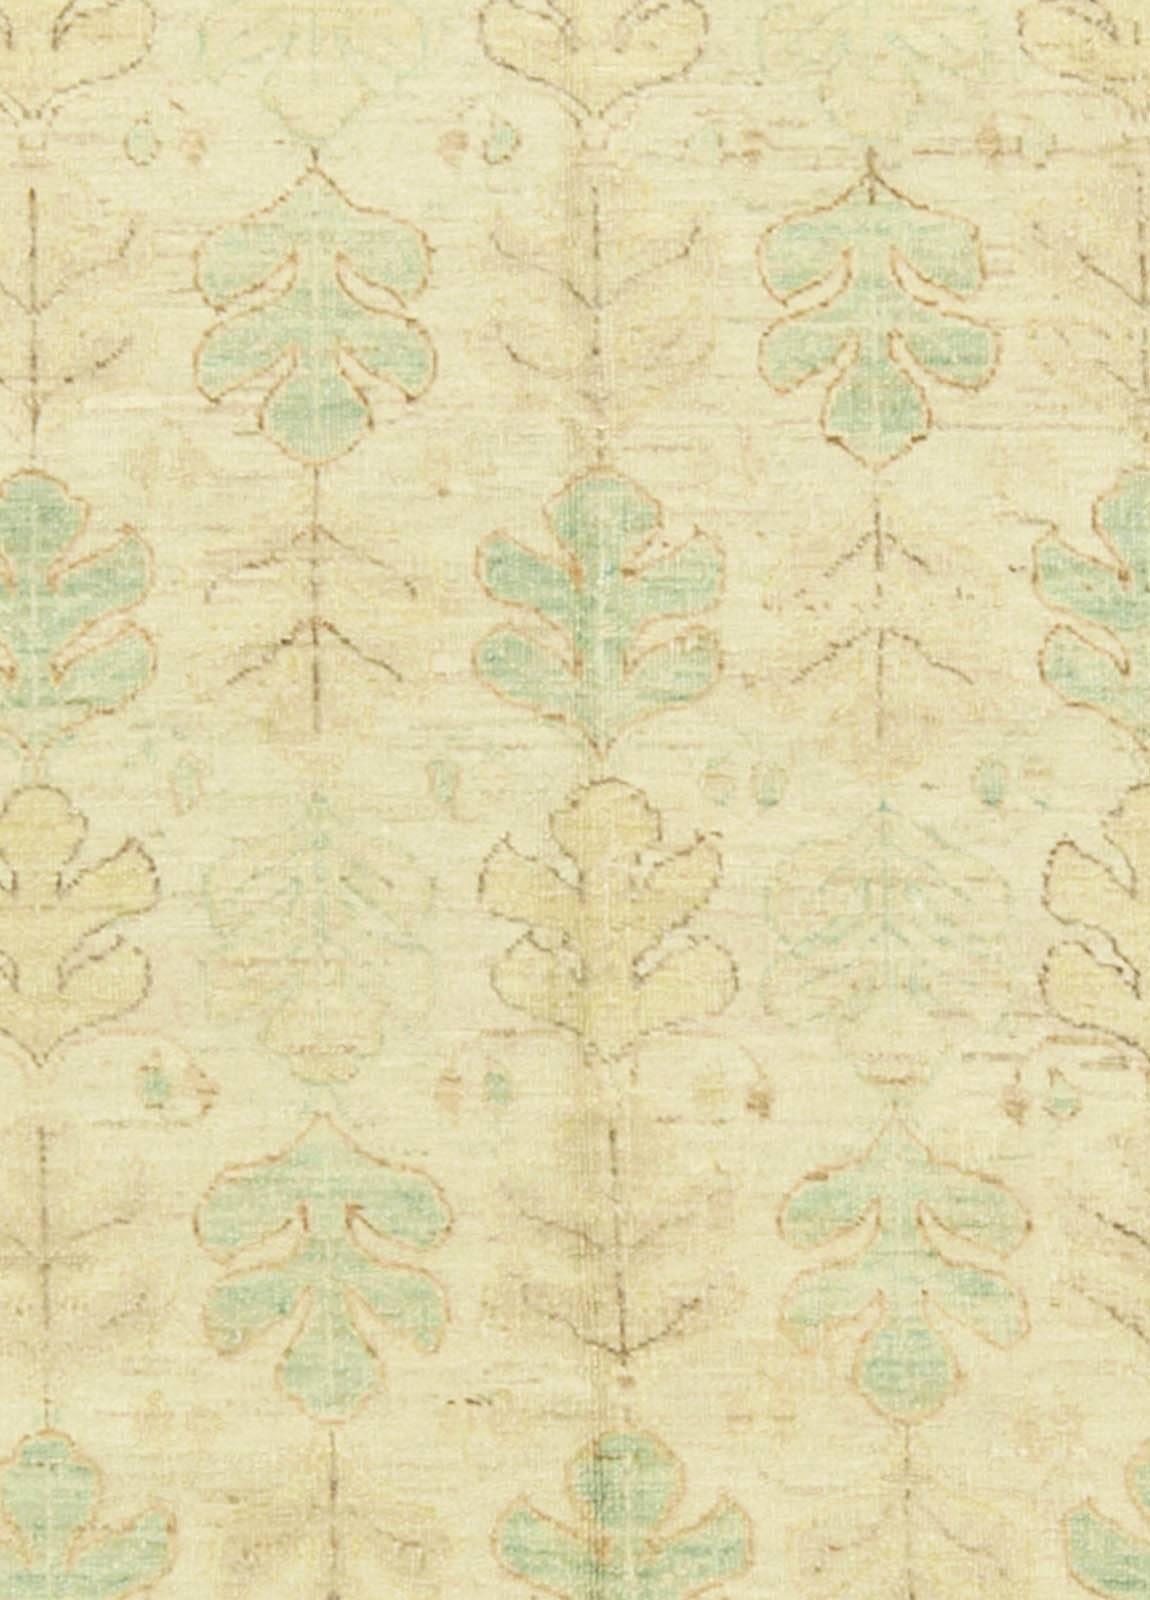 Modern traditional oriental inspired handmade rug by Doris Leslie Blau
Size: 6'2